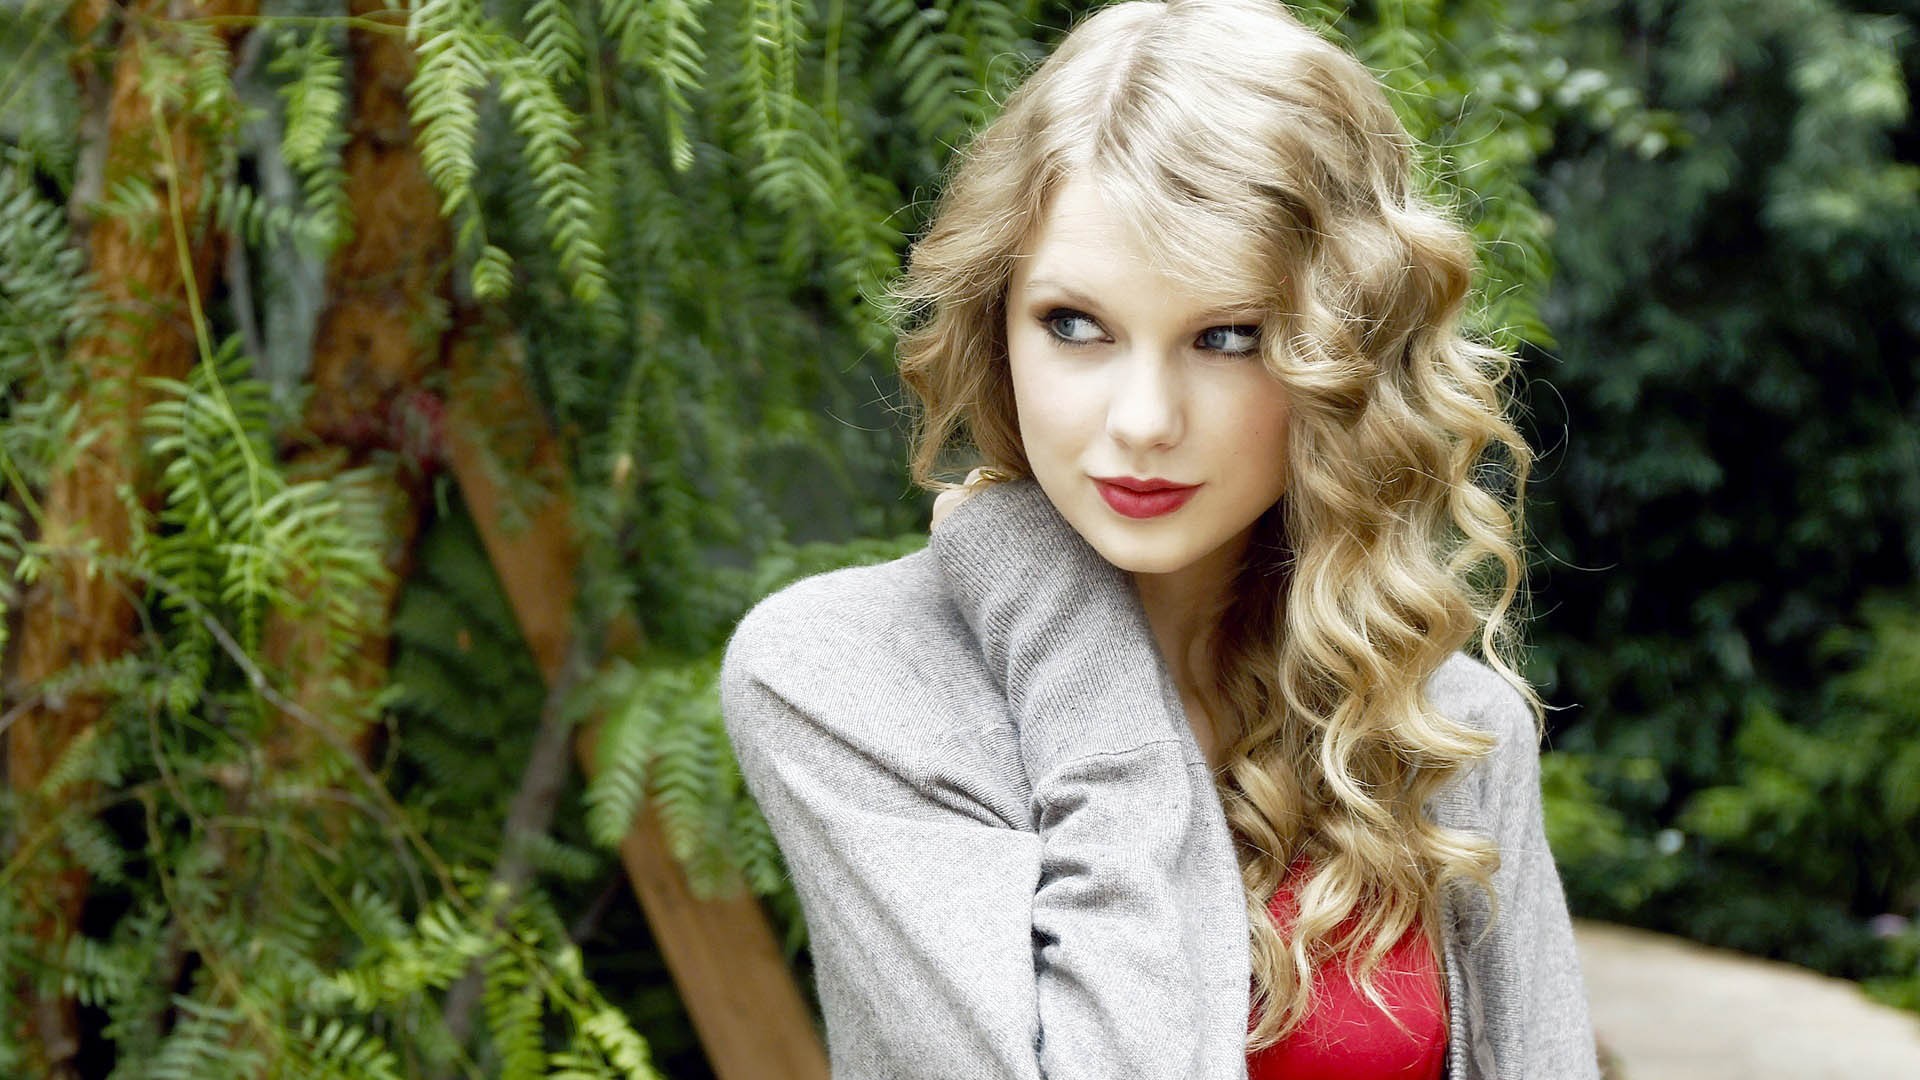 People 1920x1080 Taylor Swift celebrity blonde singer women outdoors curly hair women